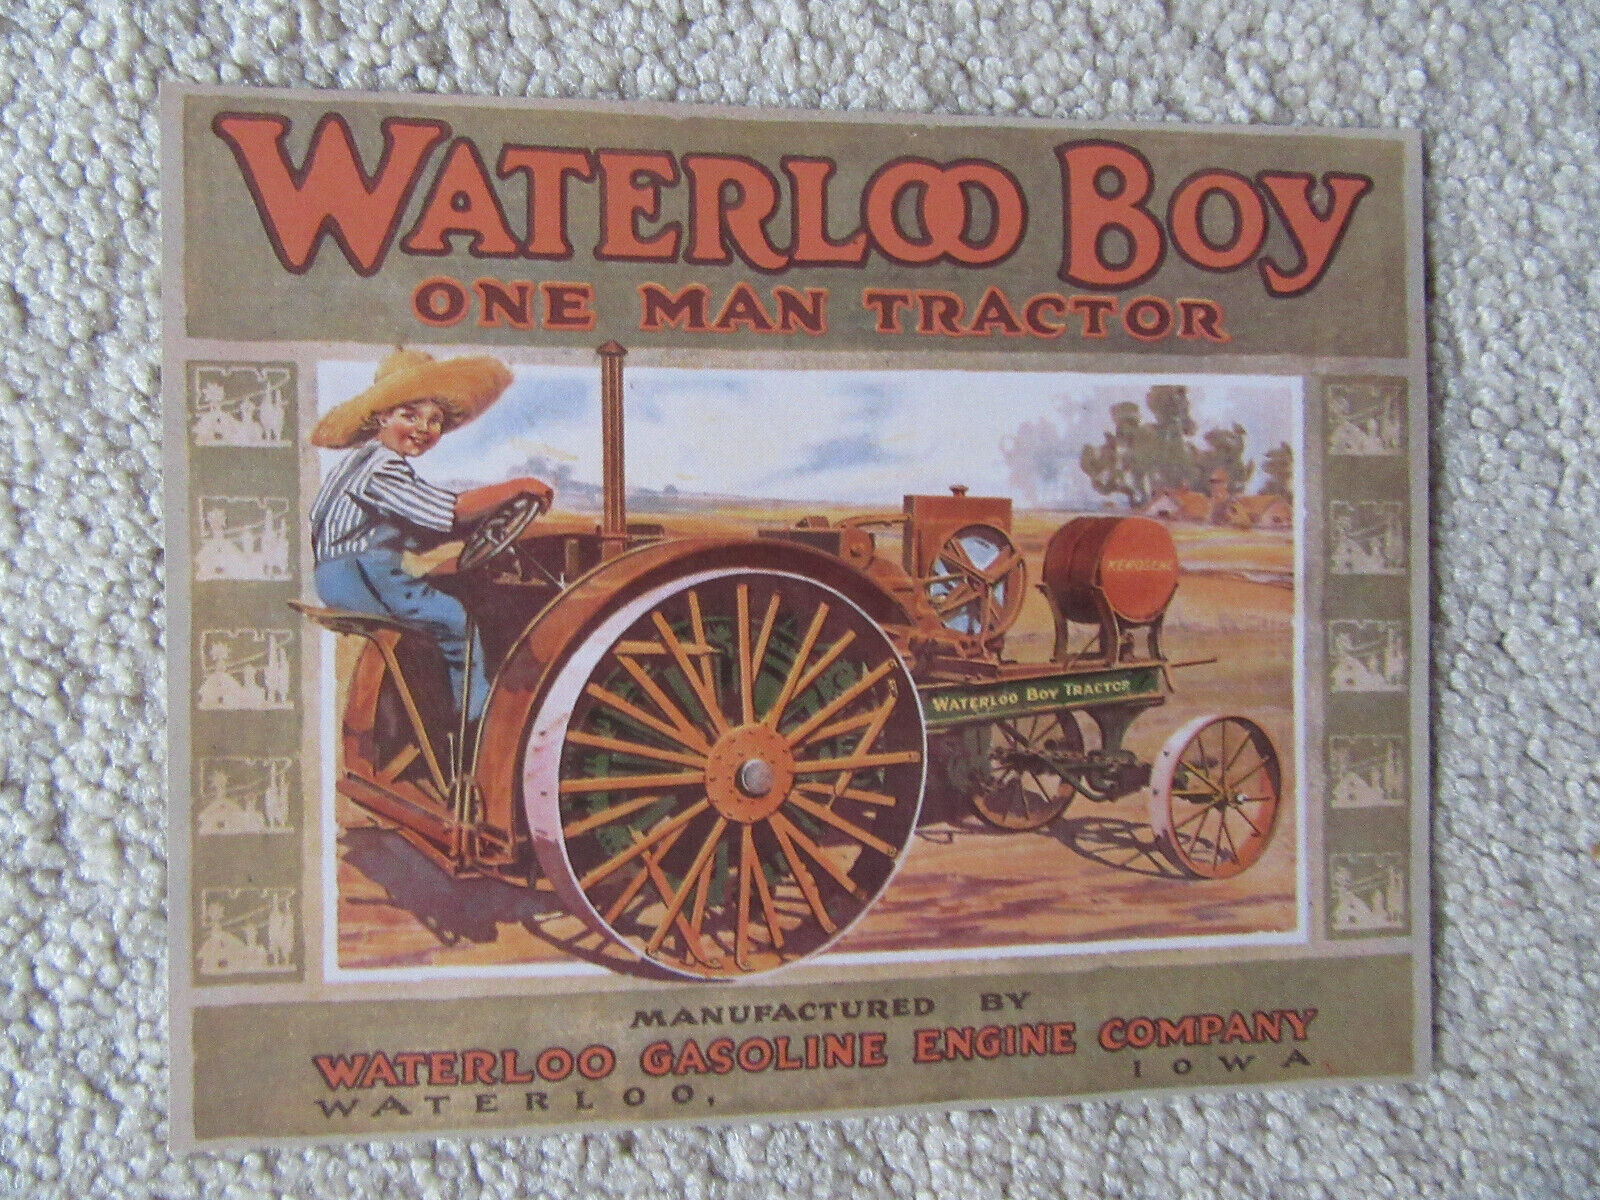 Waterloo Boy, One Man Tractor, Waterloo Gasoline Engine Co, Waterloo, Iowa